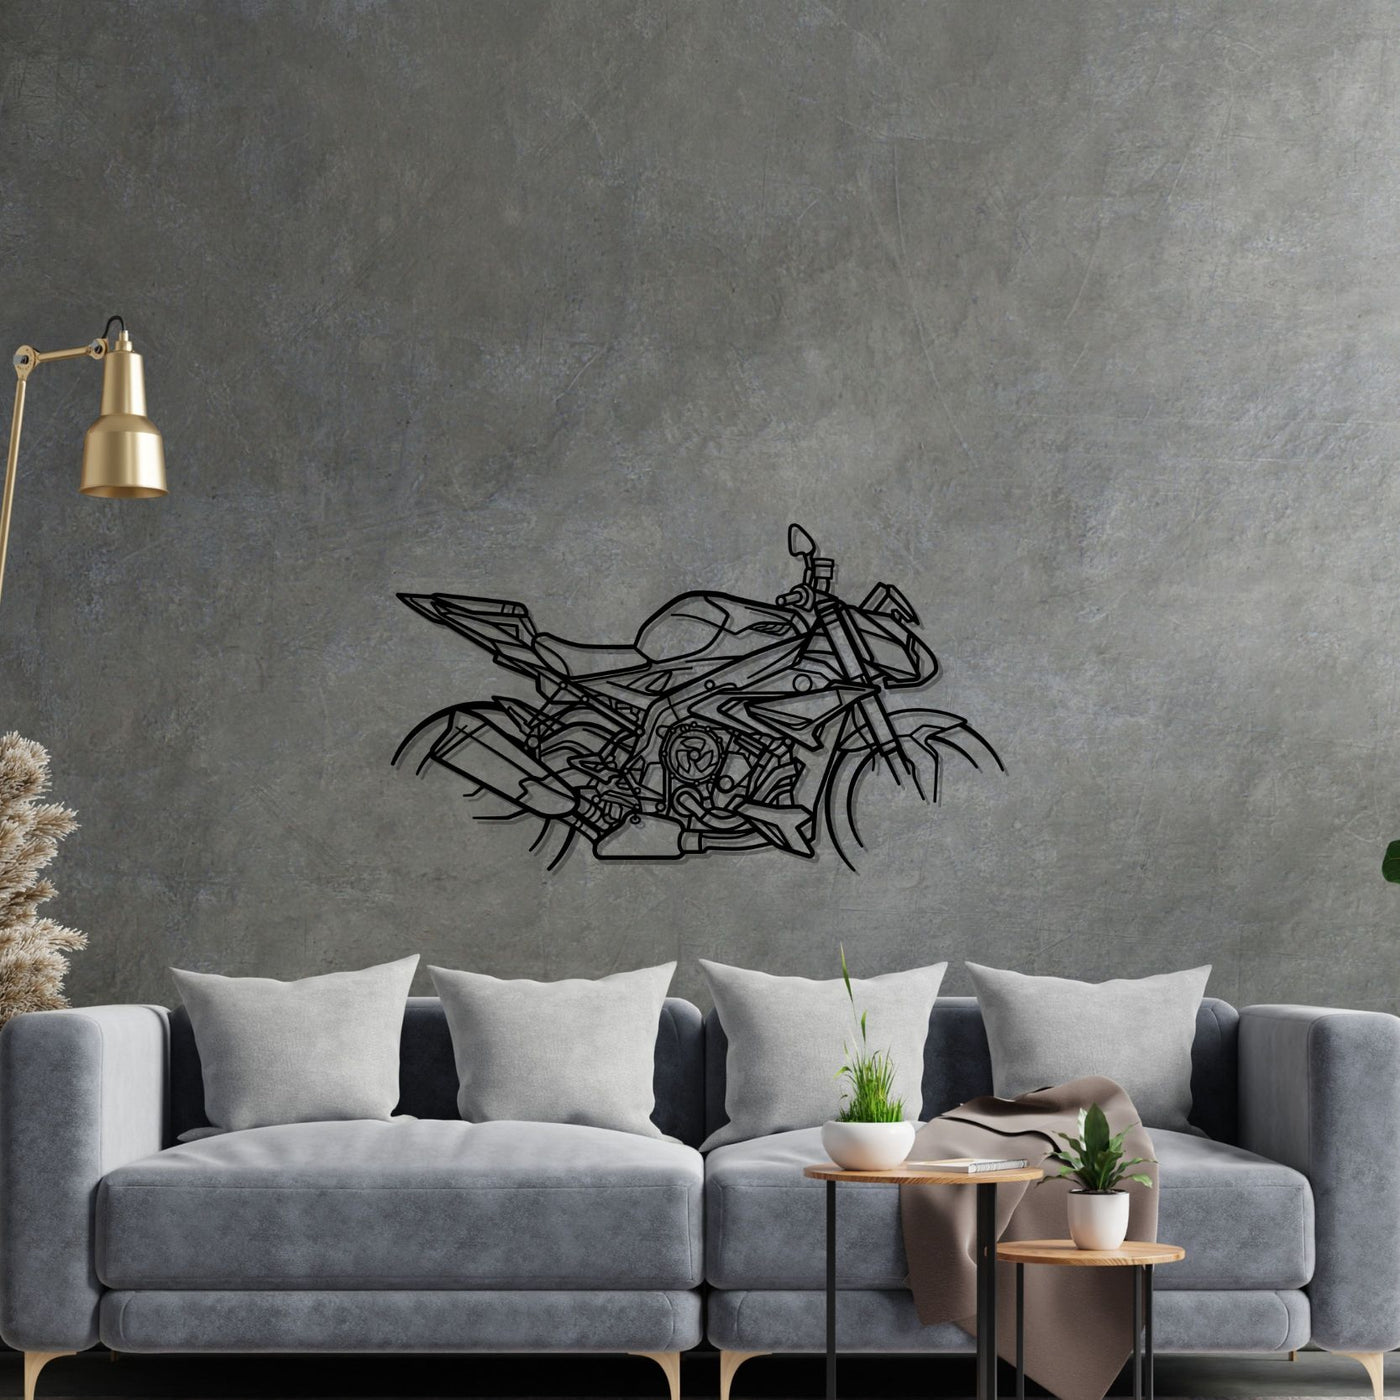 S1000R Silhouette Metal Wall Art